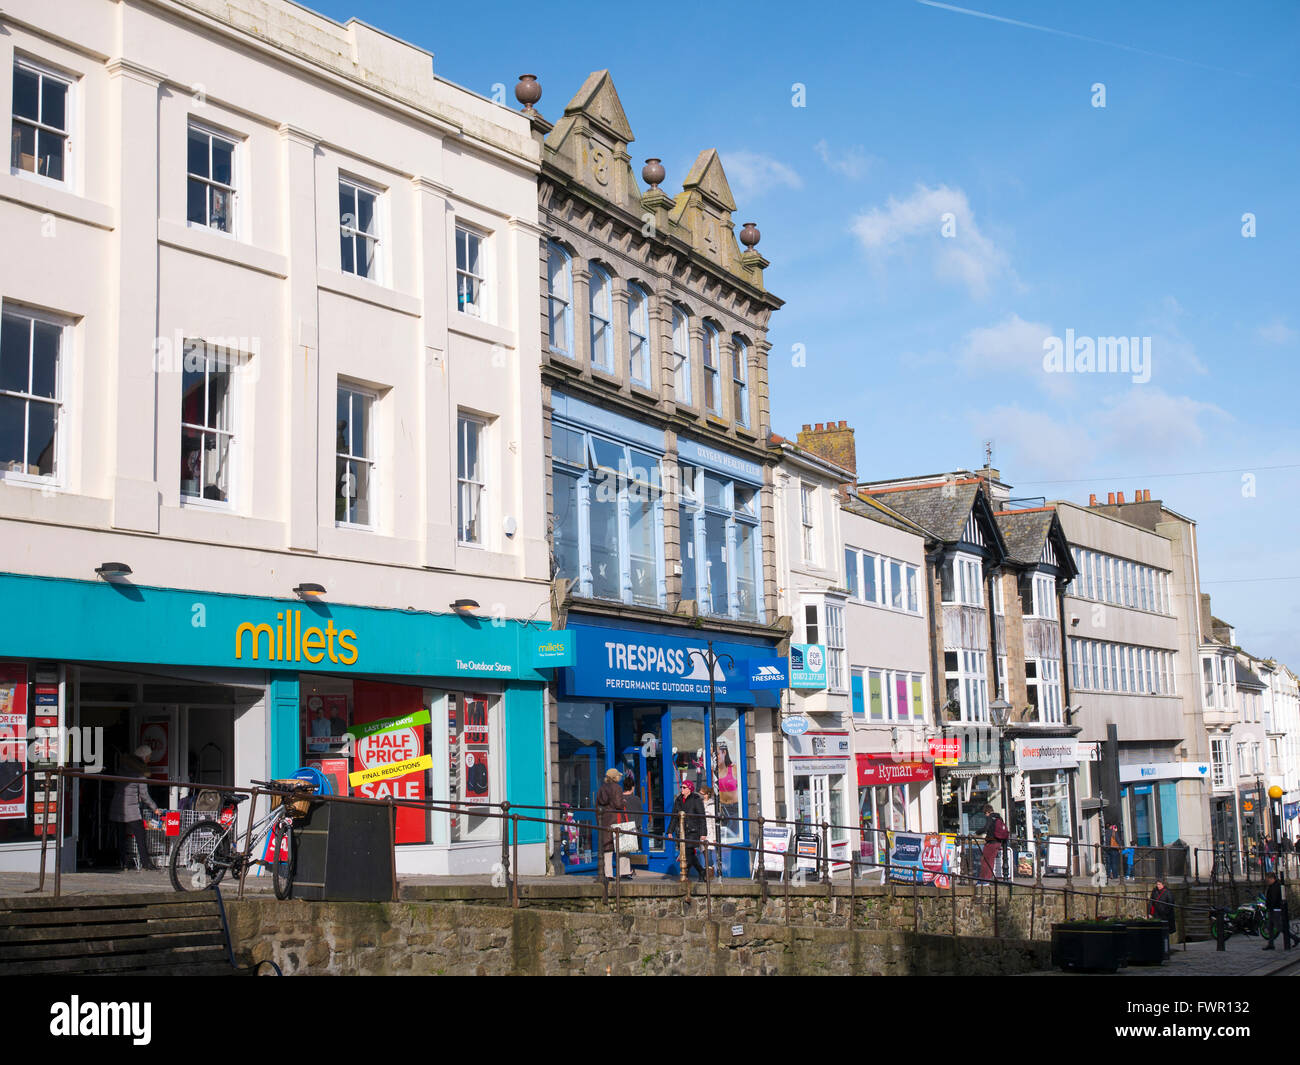 Market Jew Street shops in Penzance, Cornwall England UK. Stock Photo